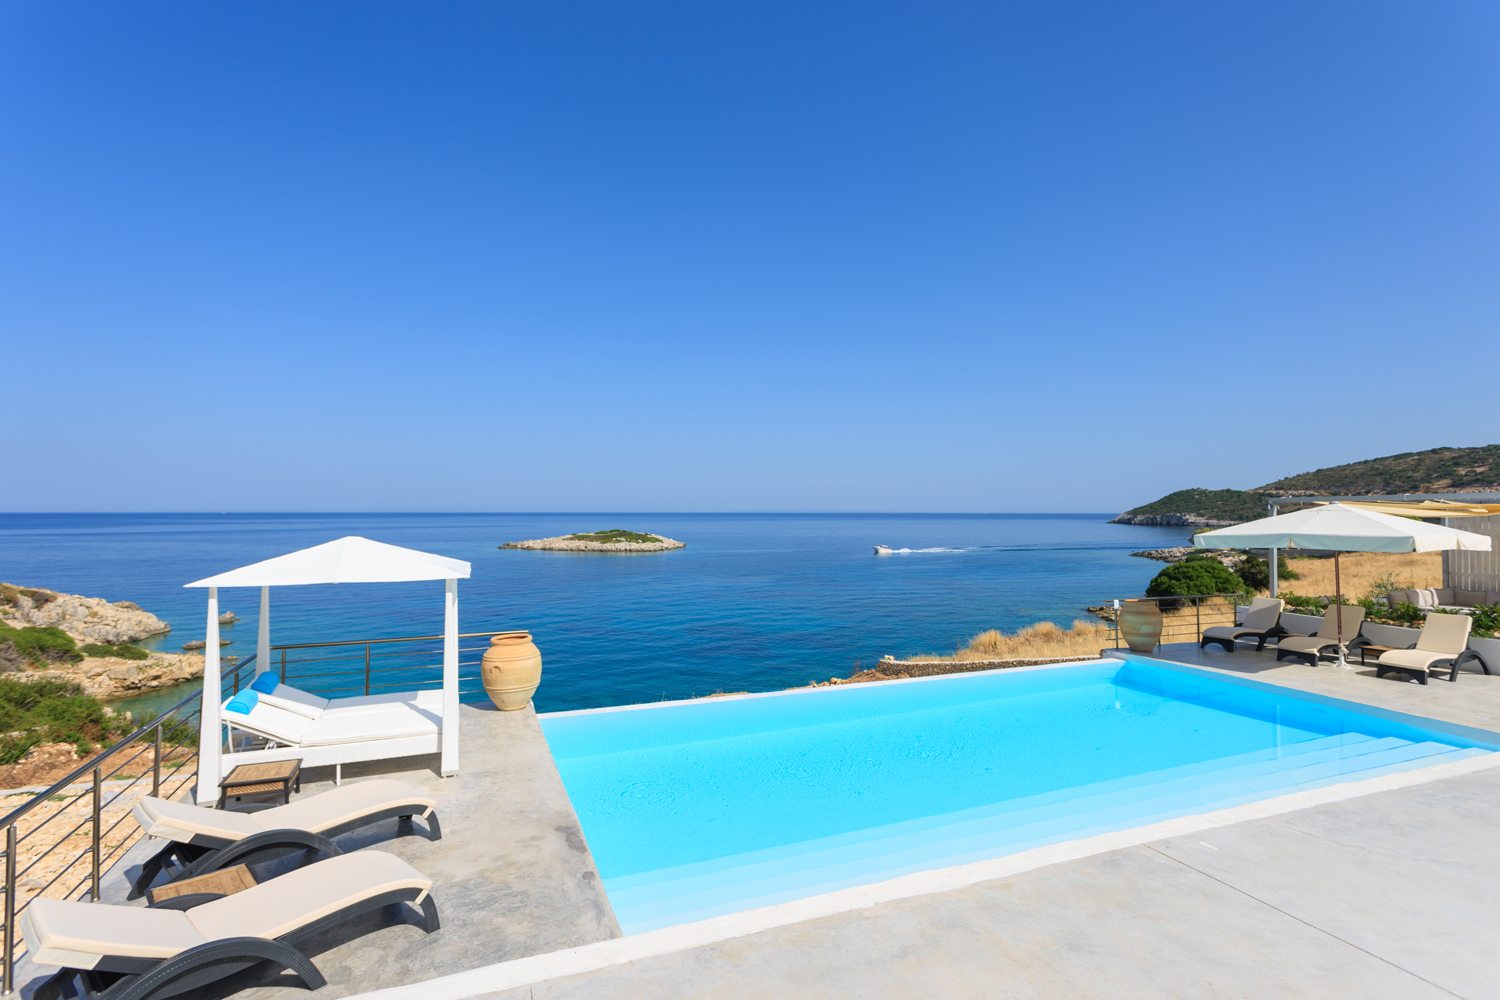 Infinity pool of Amoulakis Luxury villa in greece with The Peligoni Club